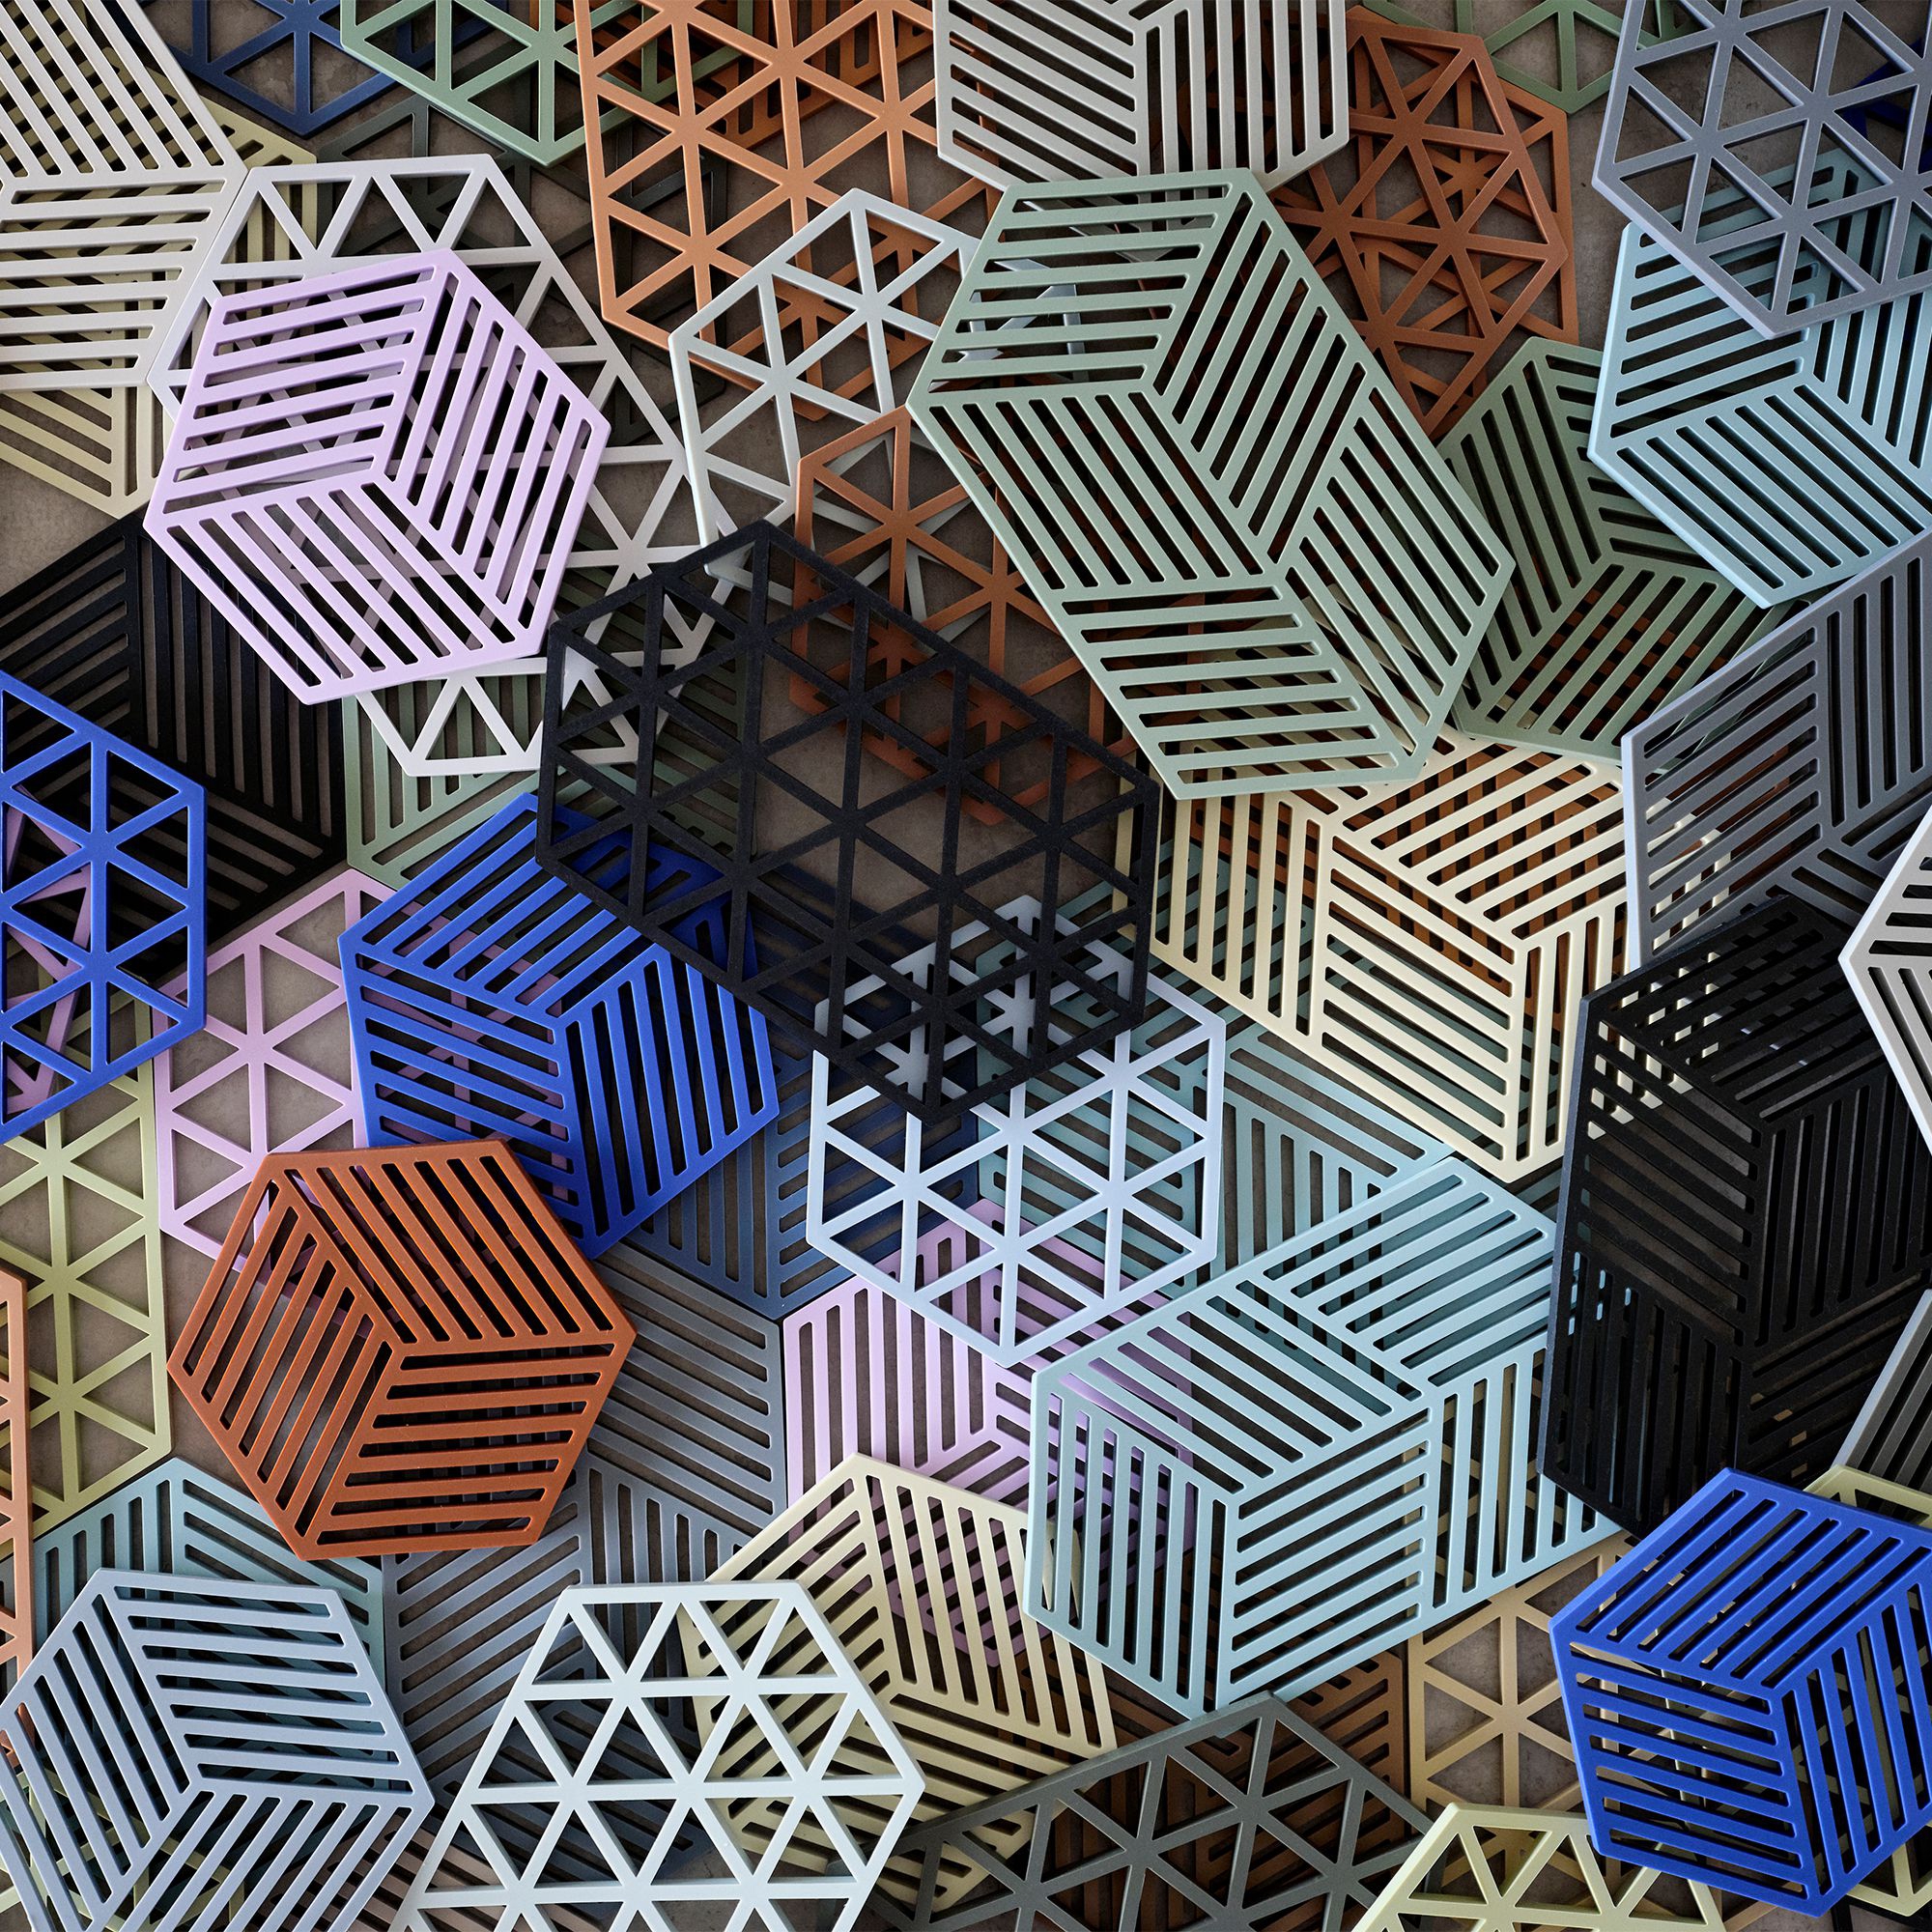 Zone - Hexagon Trivet - Lupine